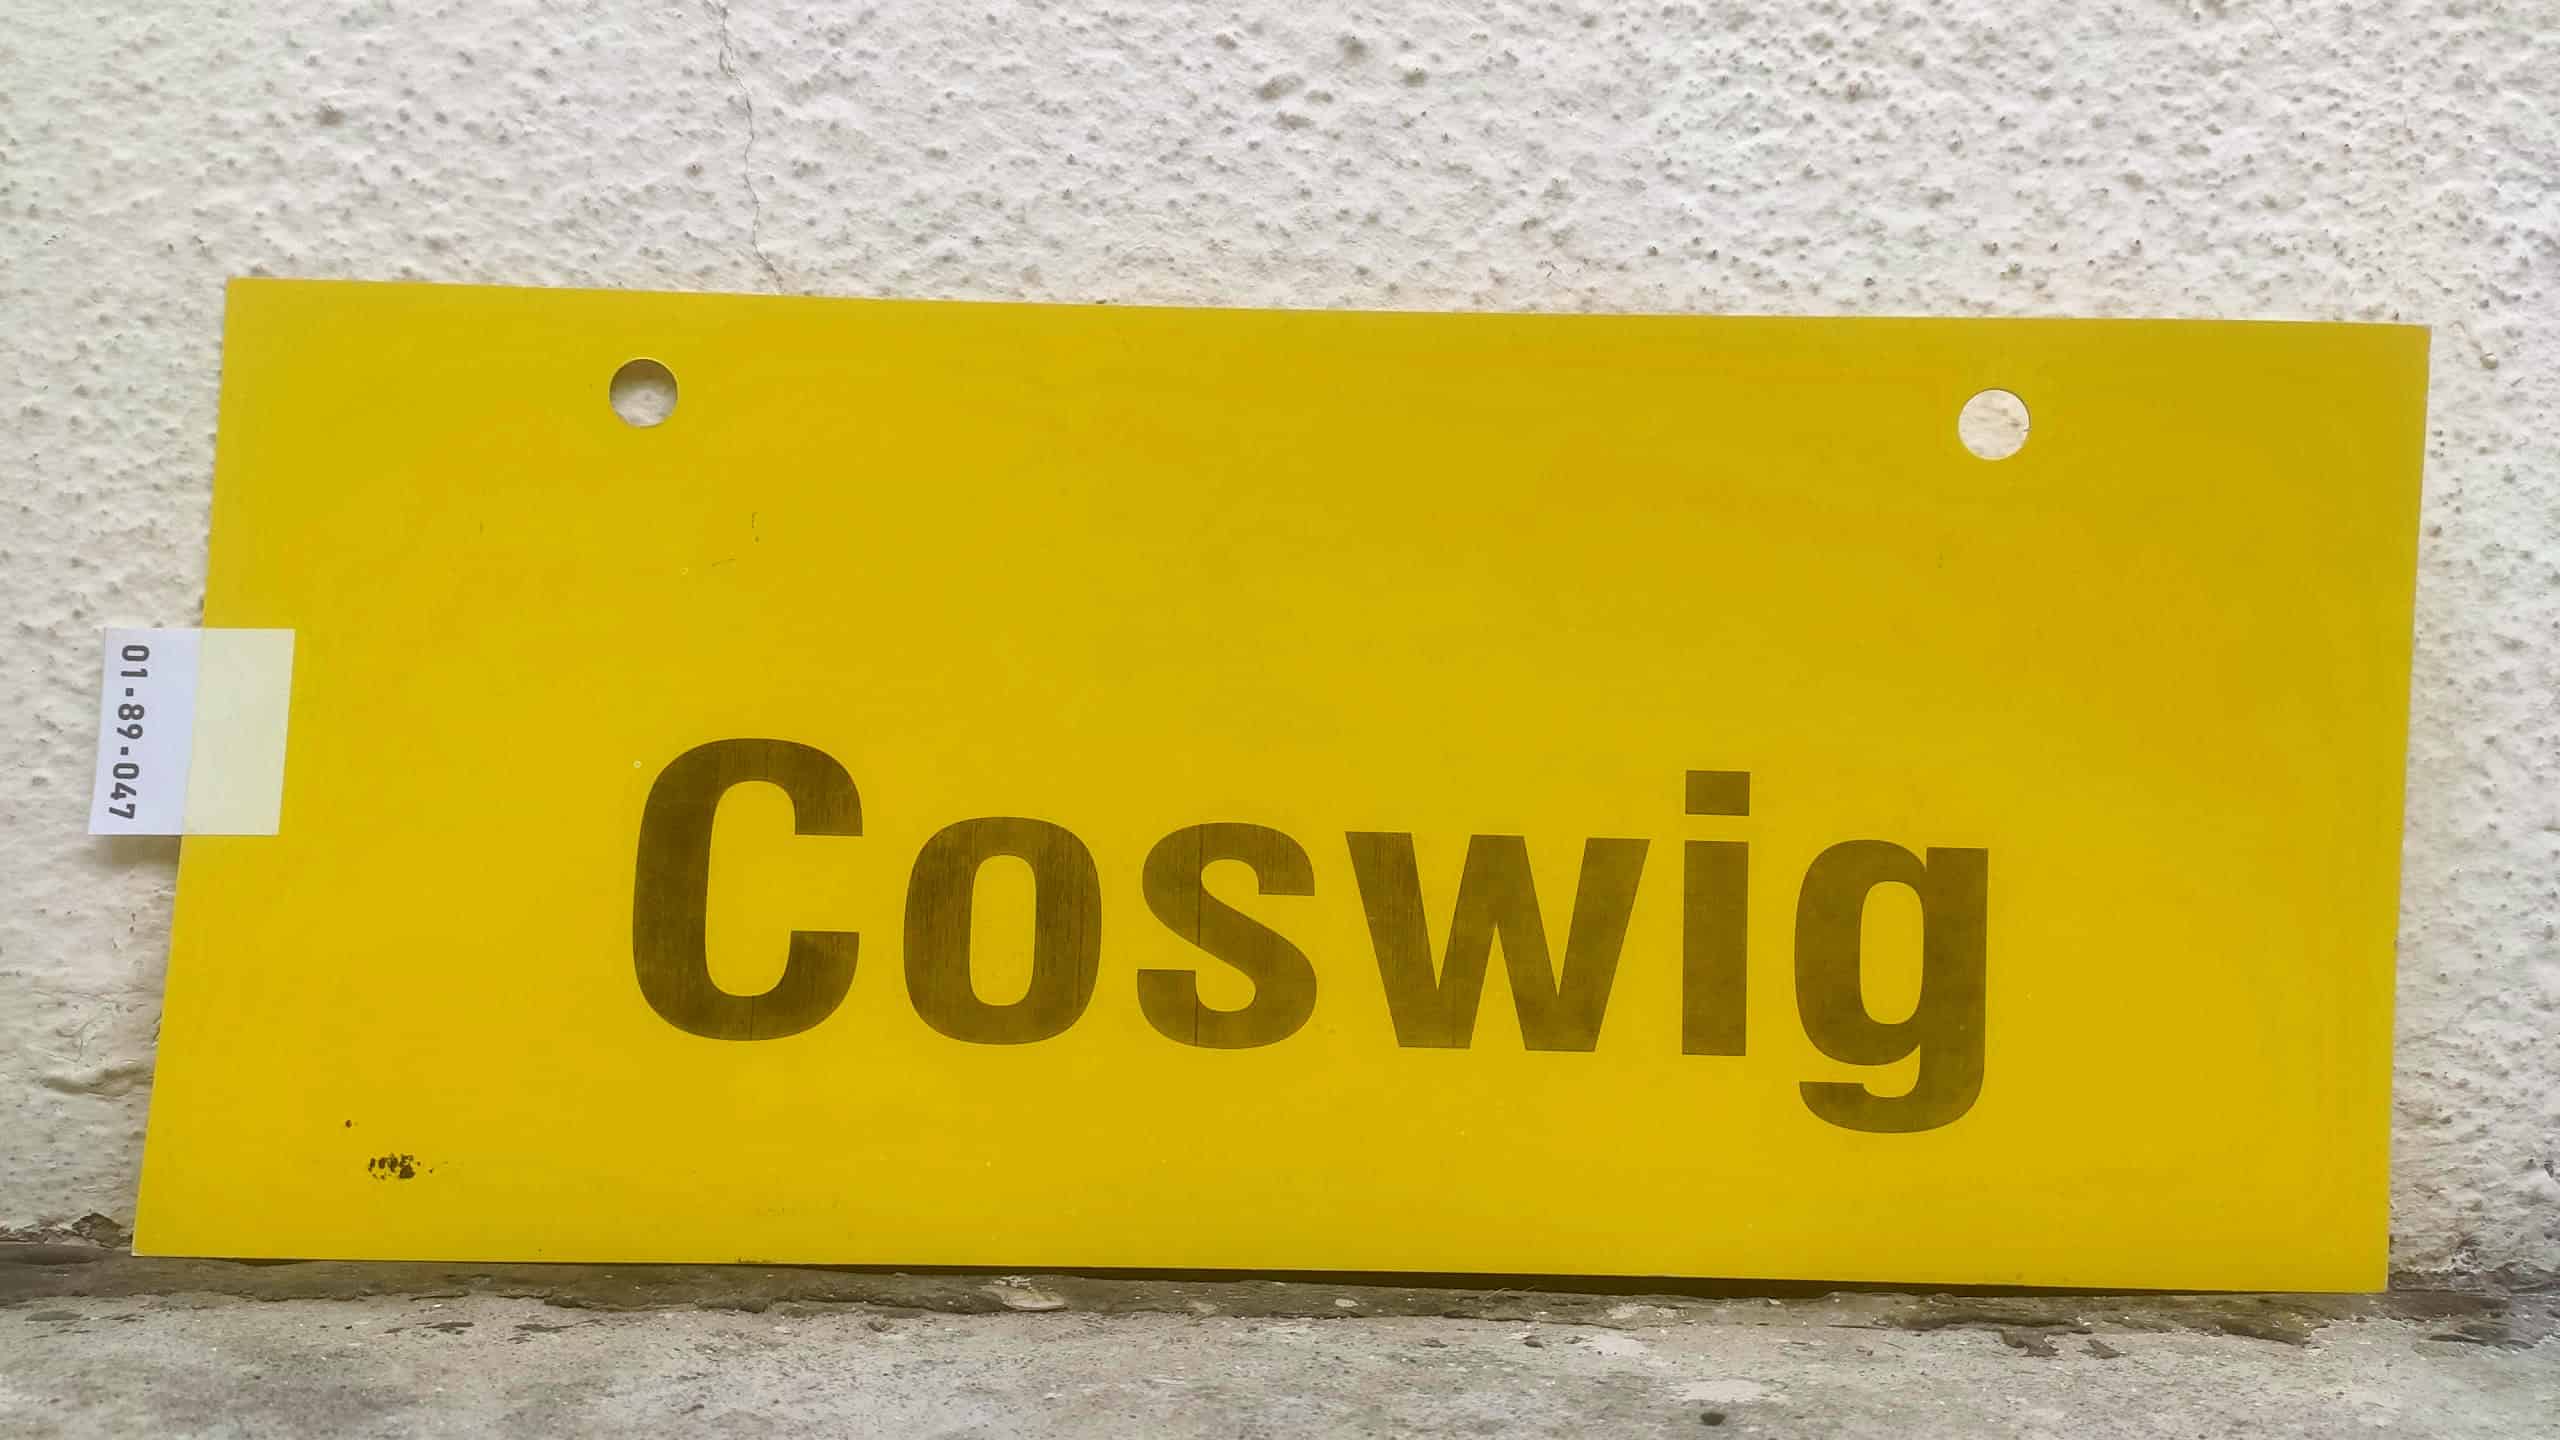 Coswig